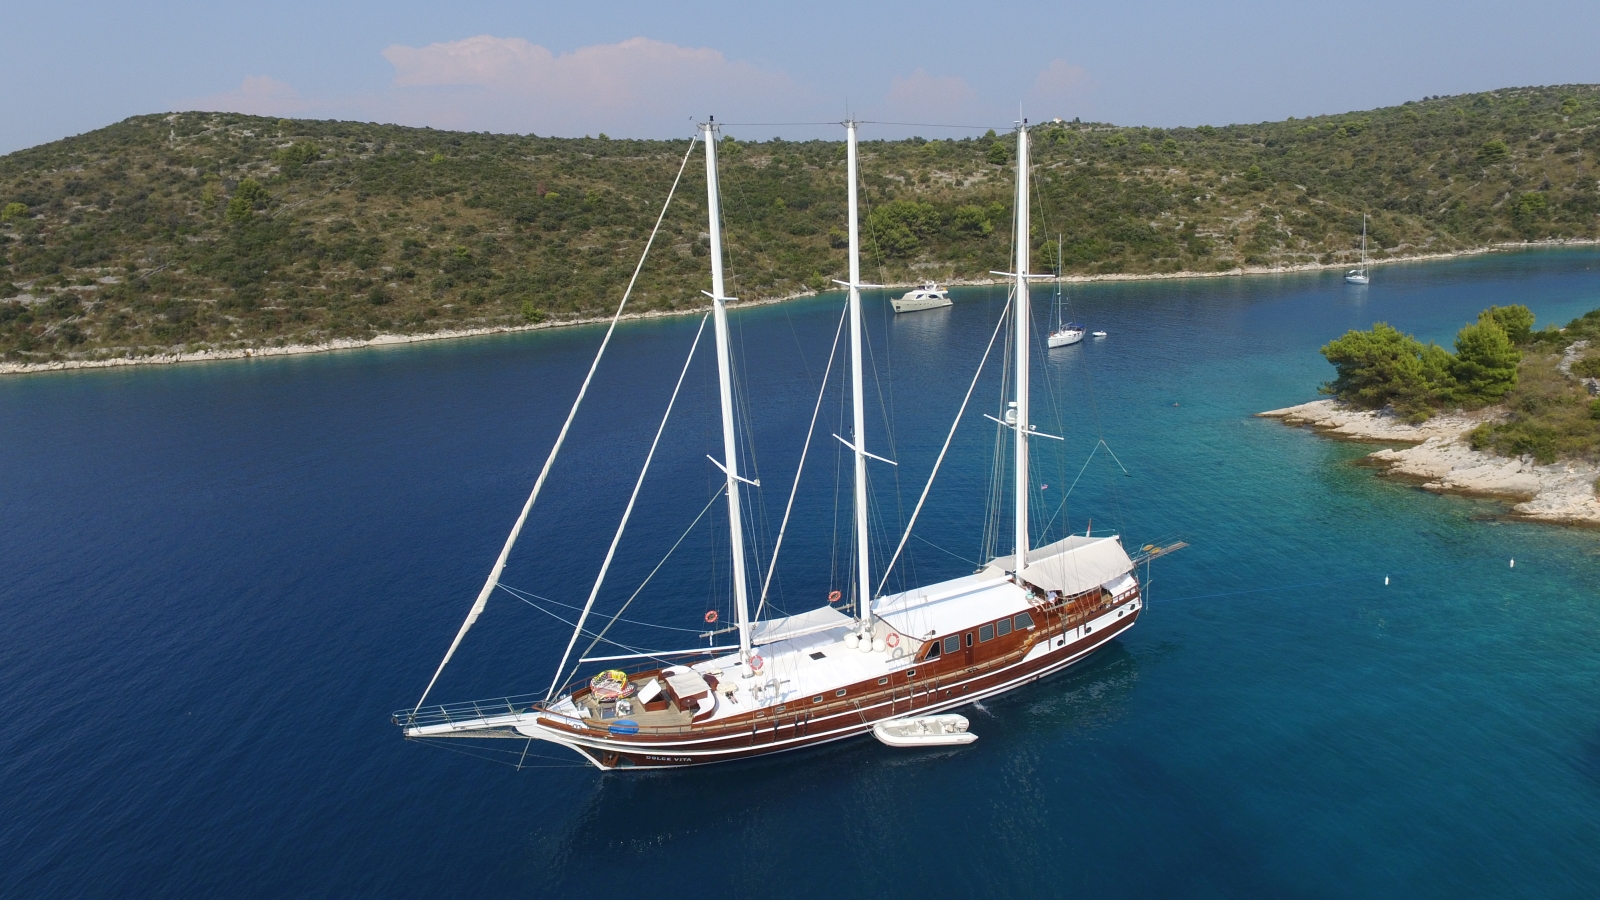 The Dolce Vita gulet sailing along Croatia's Dalmatian coast